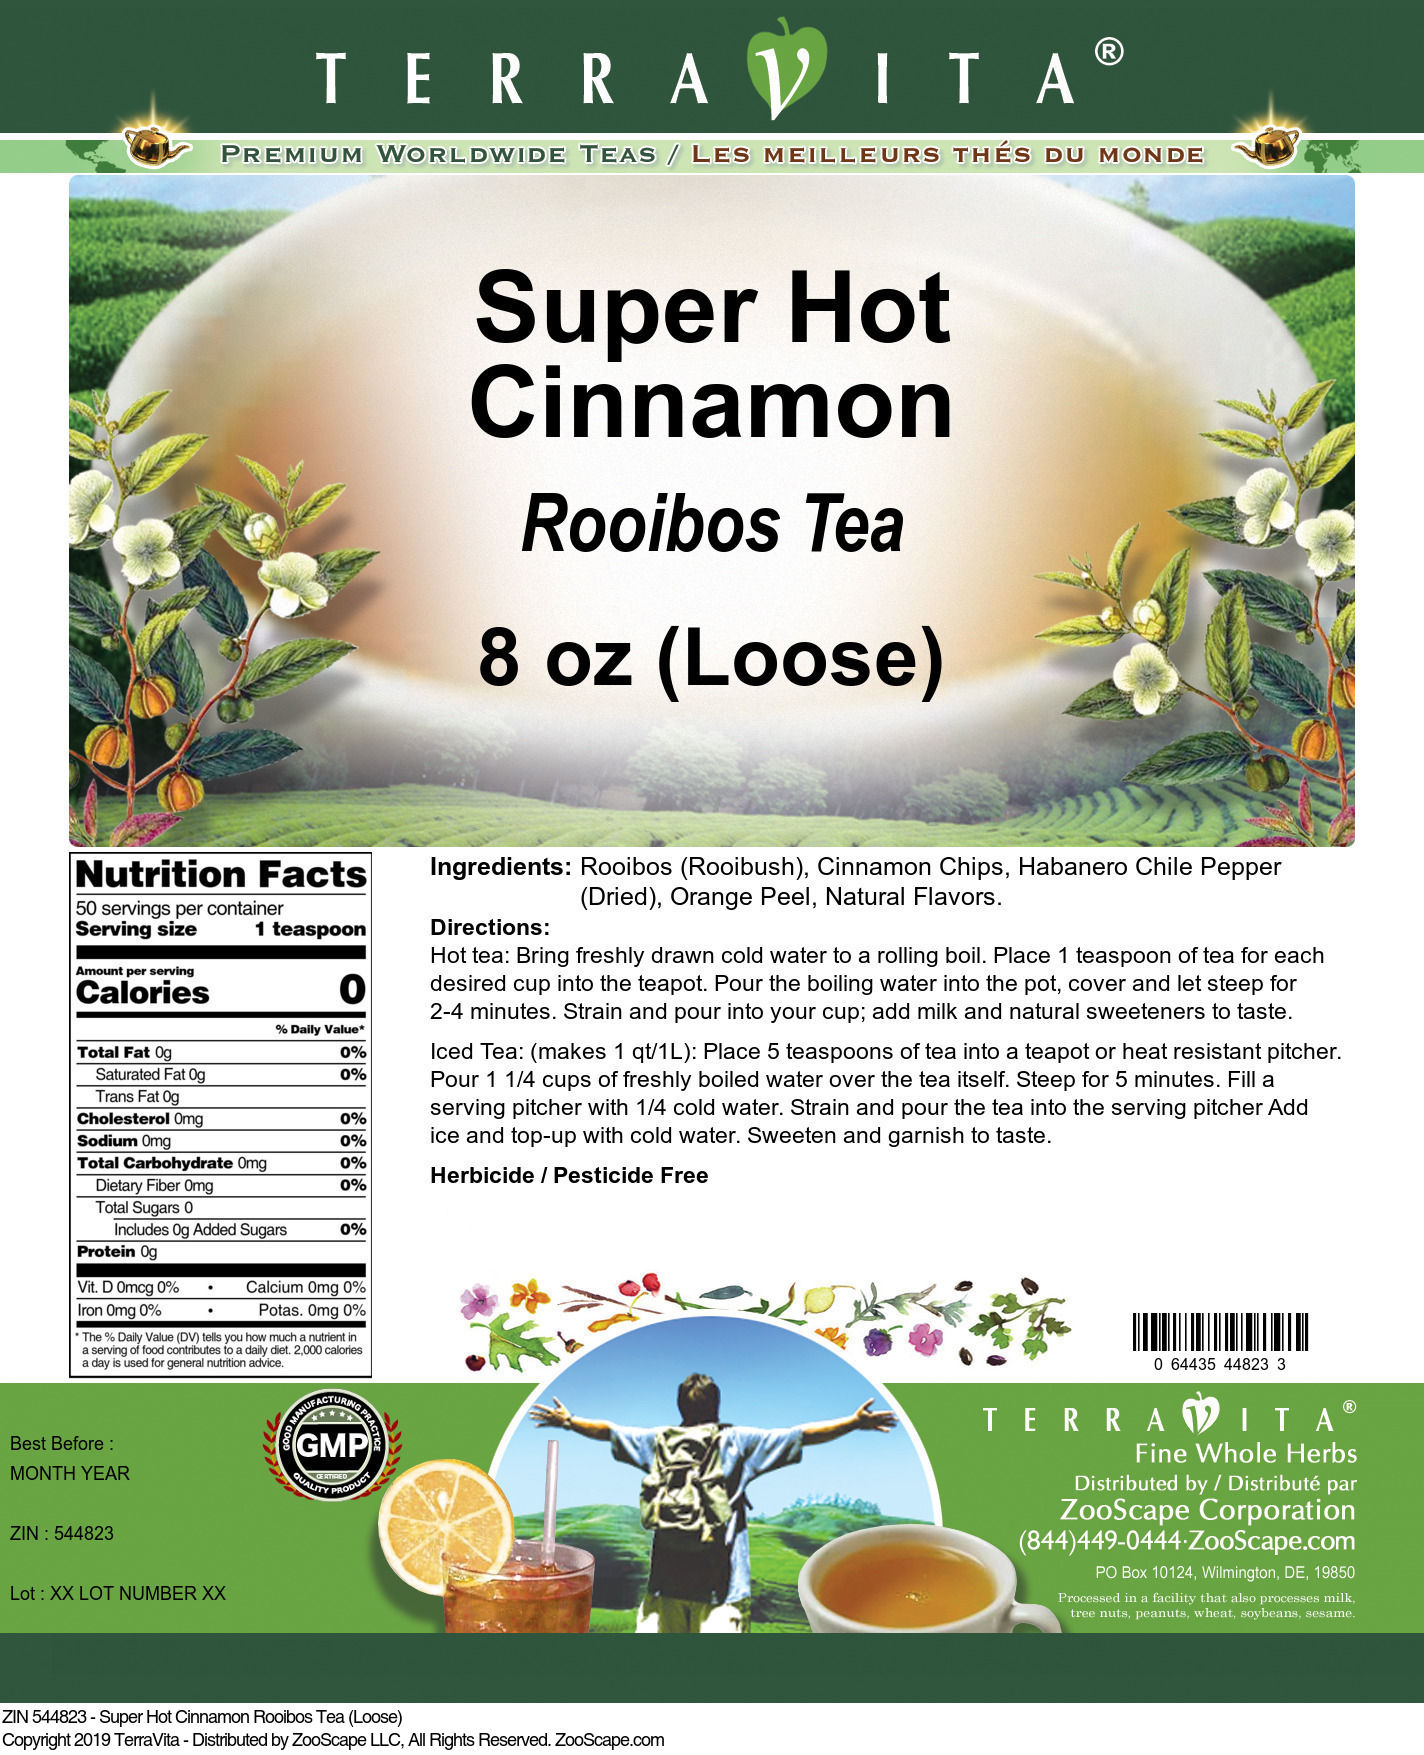 Super Hot Cinnamon Rooibos Tea (Loose) - Label